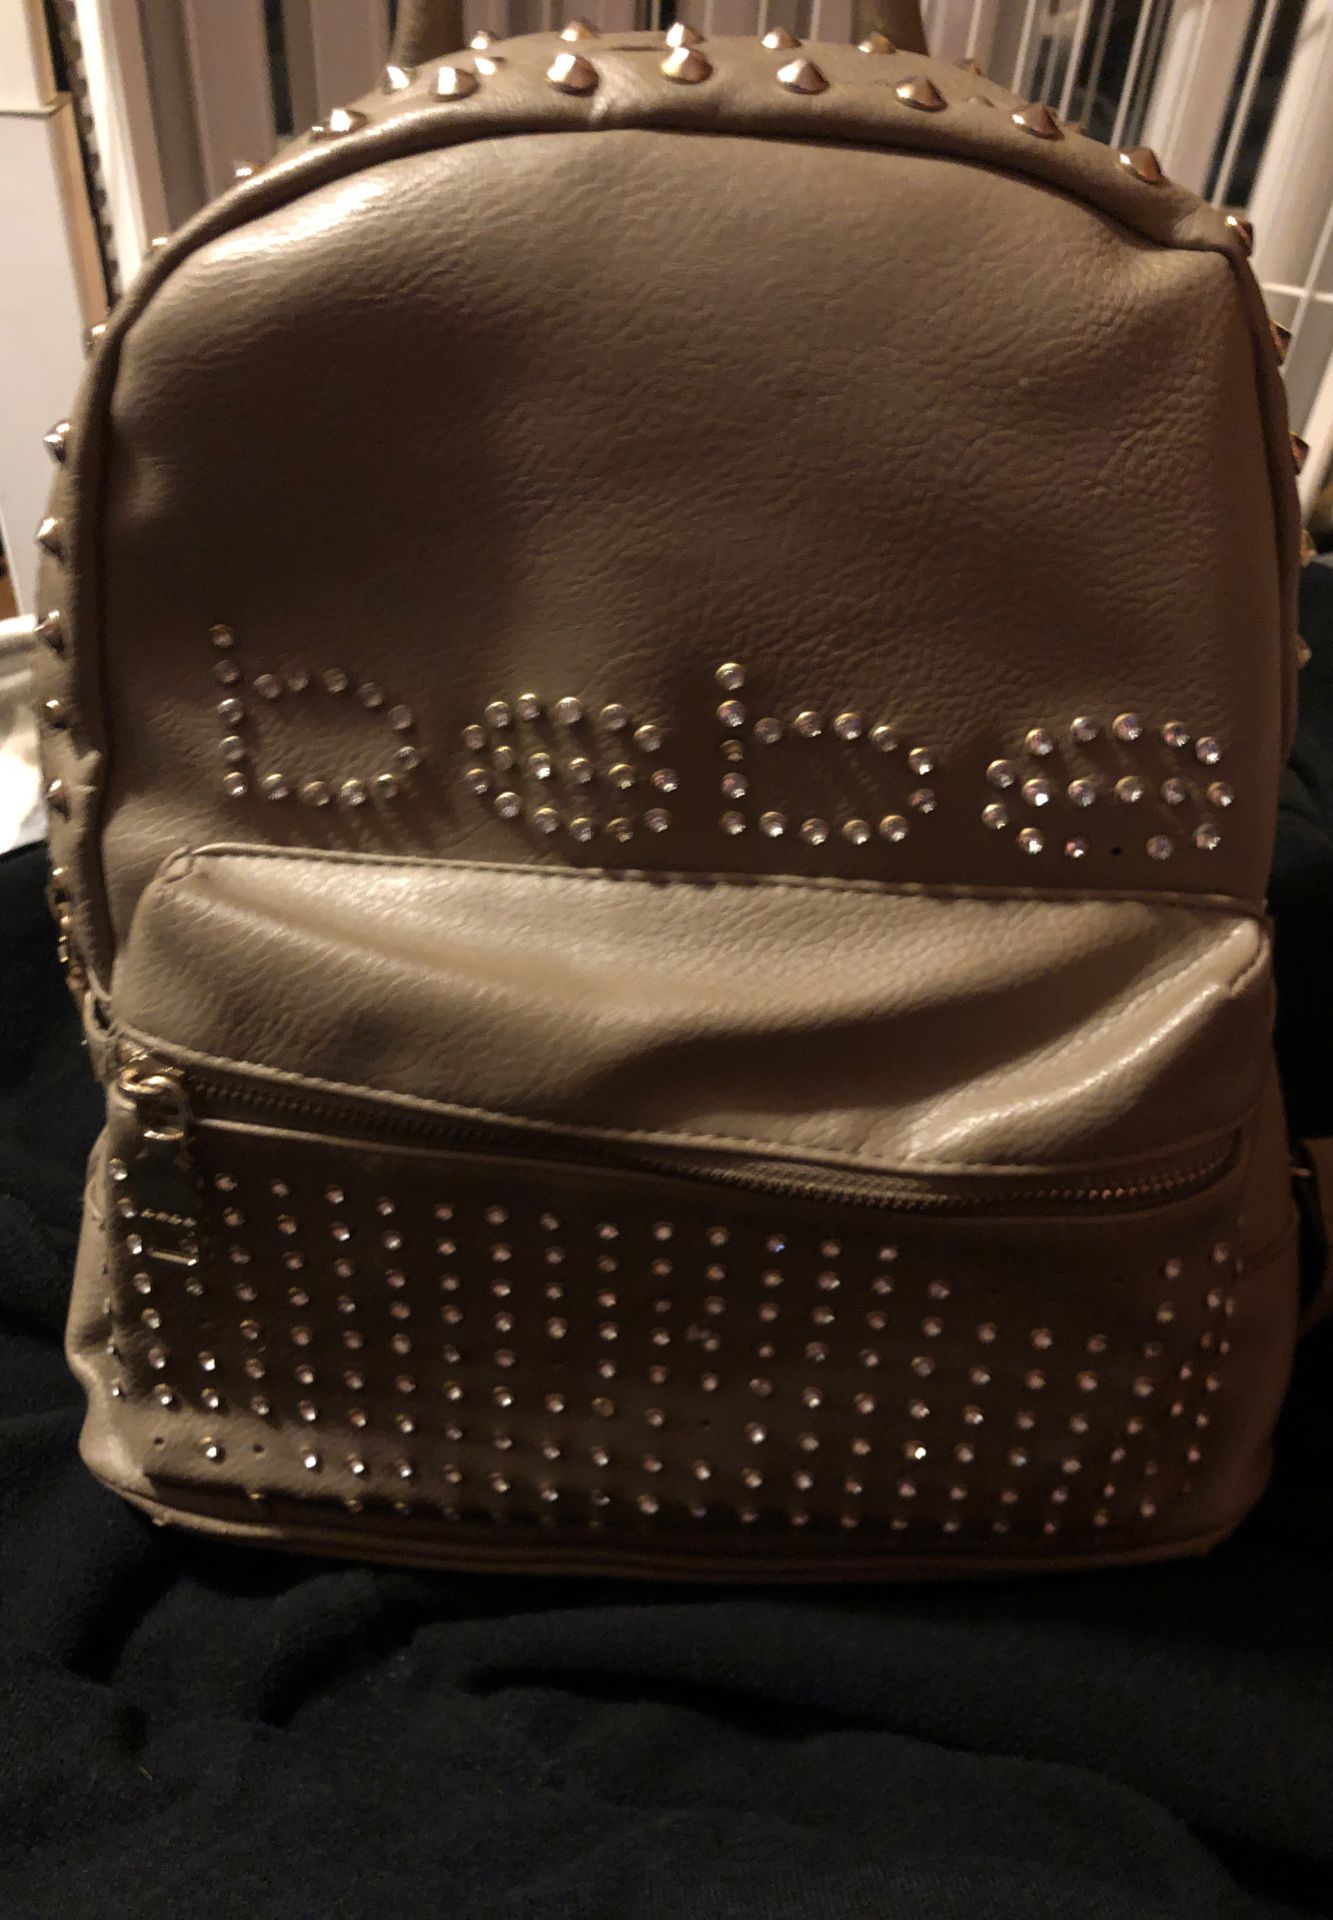 Bebe Backpack purse